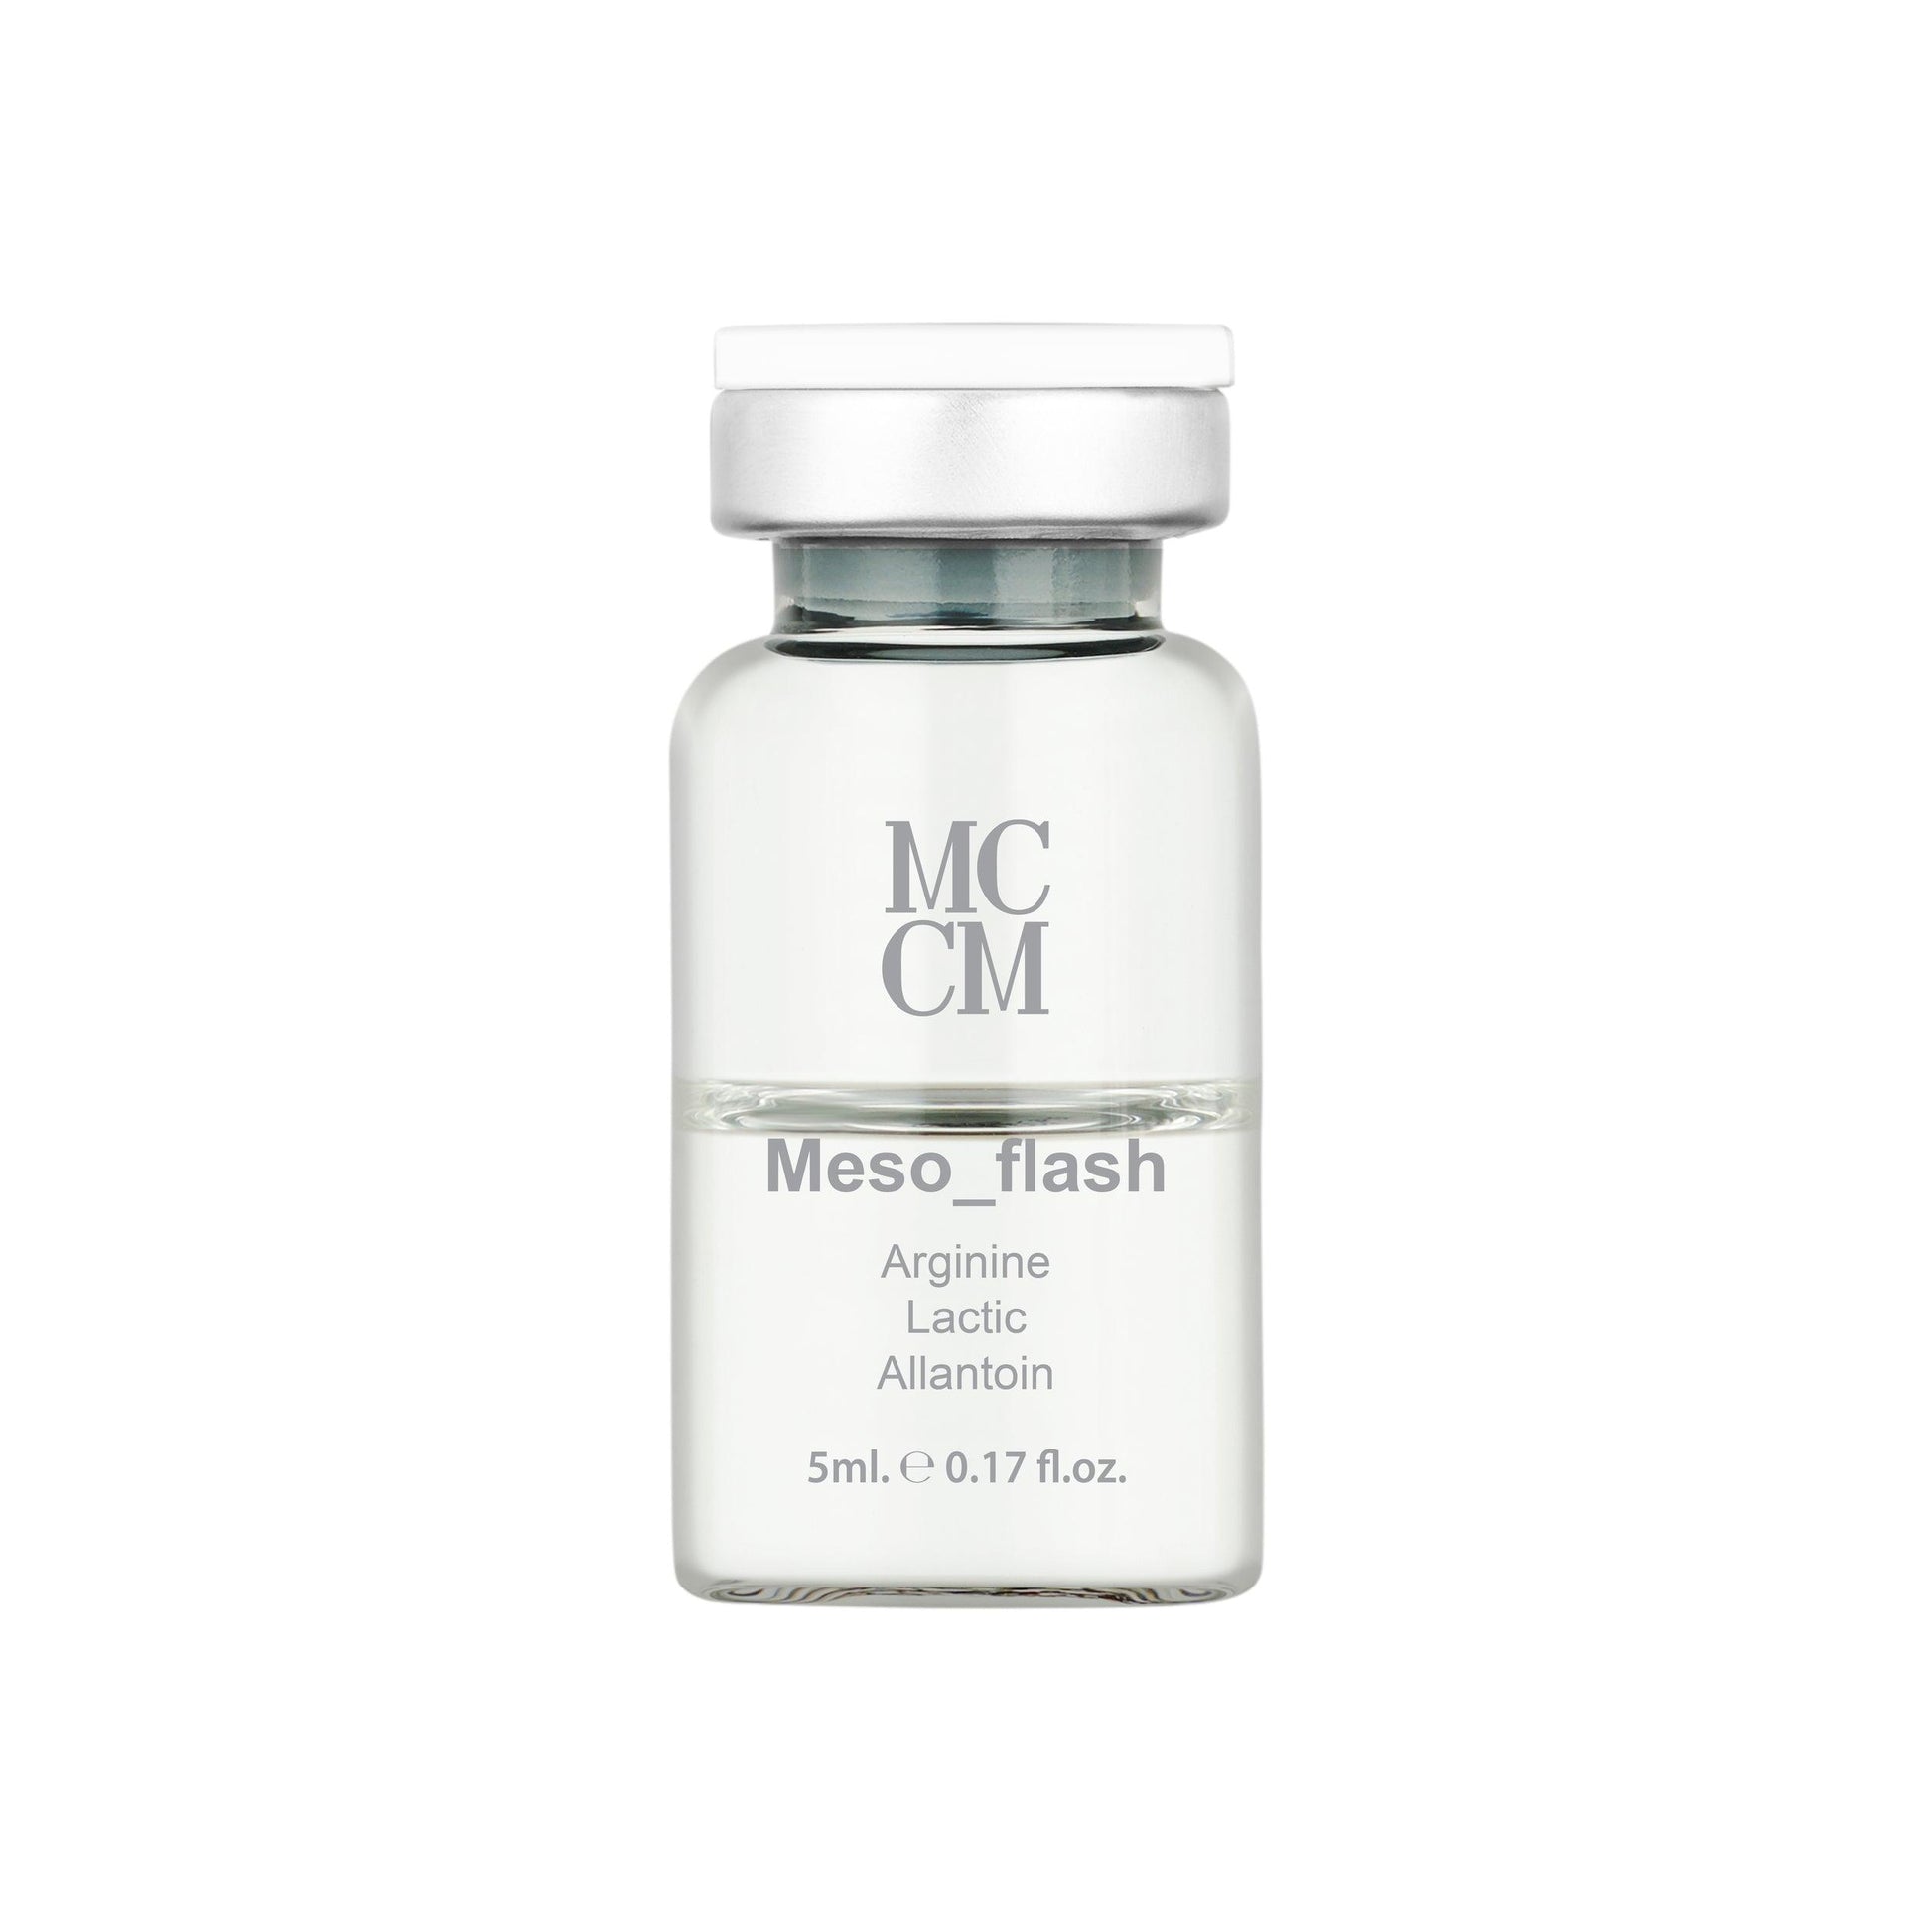 Meso_flash - MCCM Medical Cosmetics